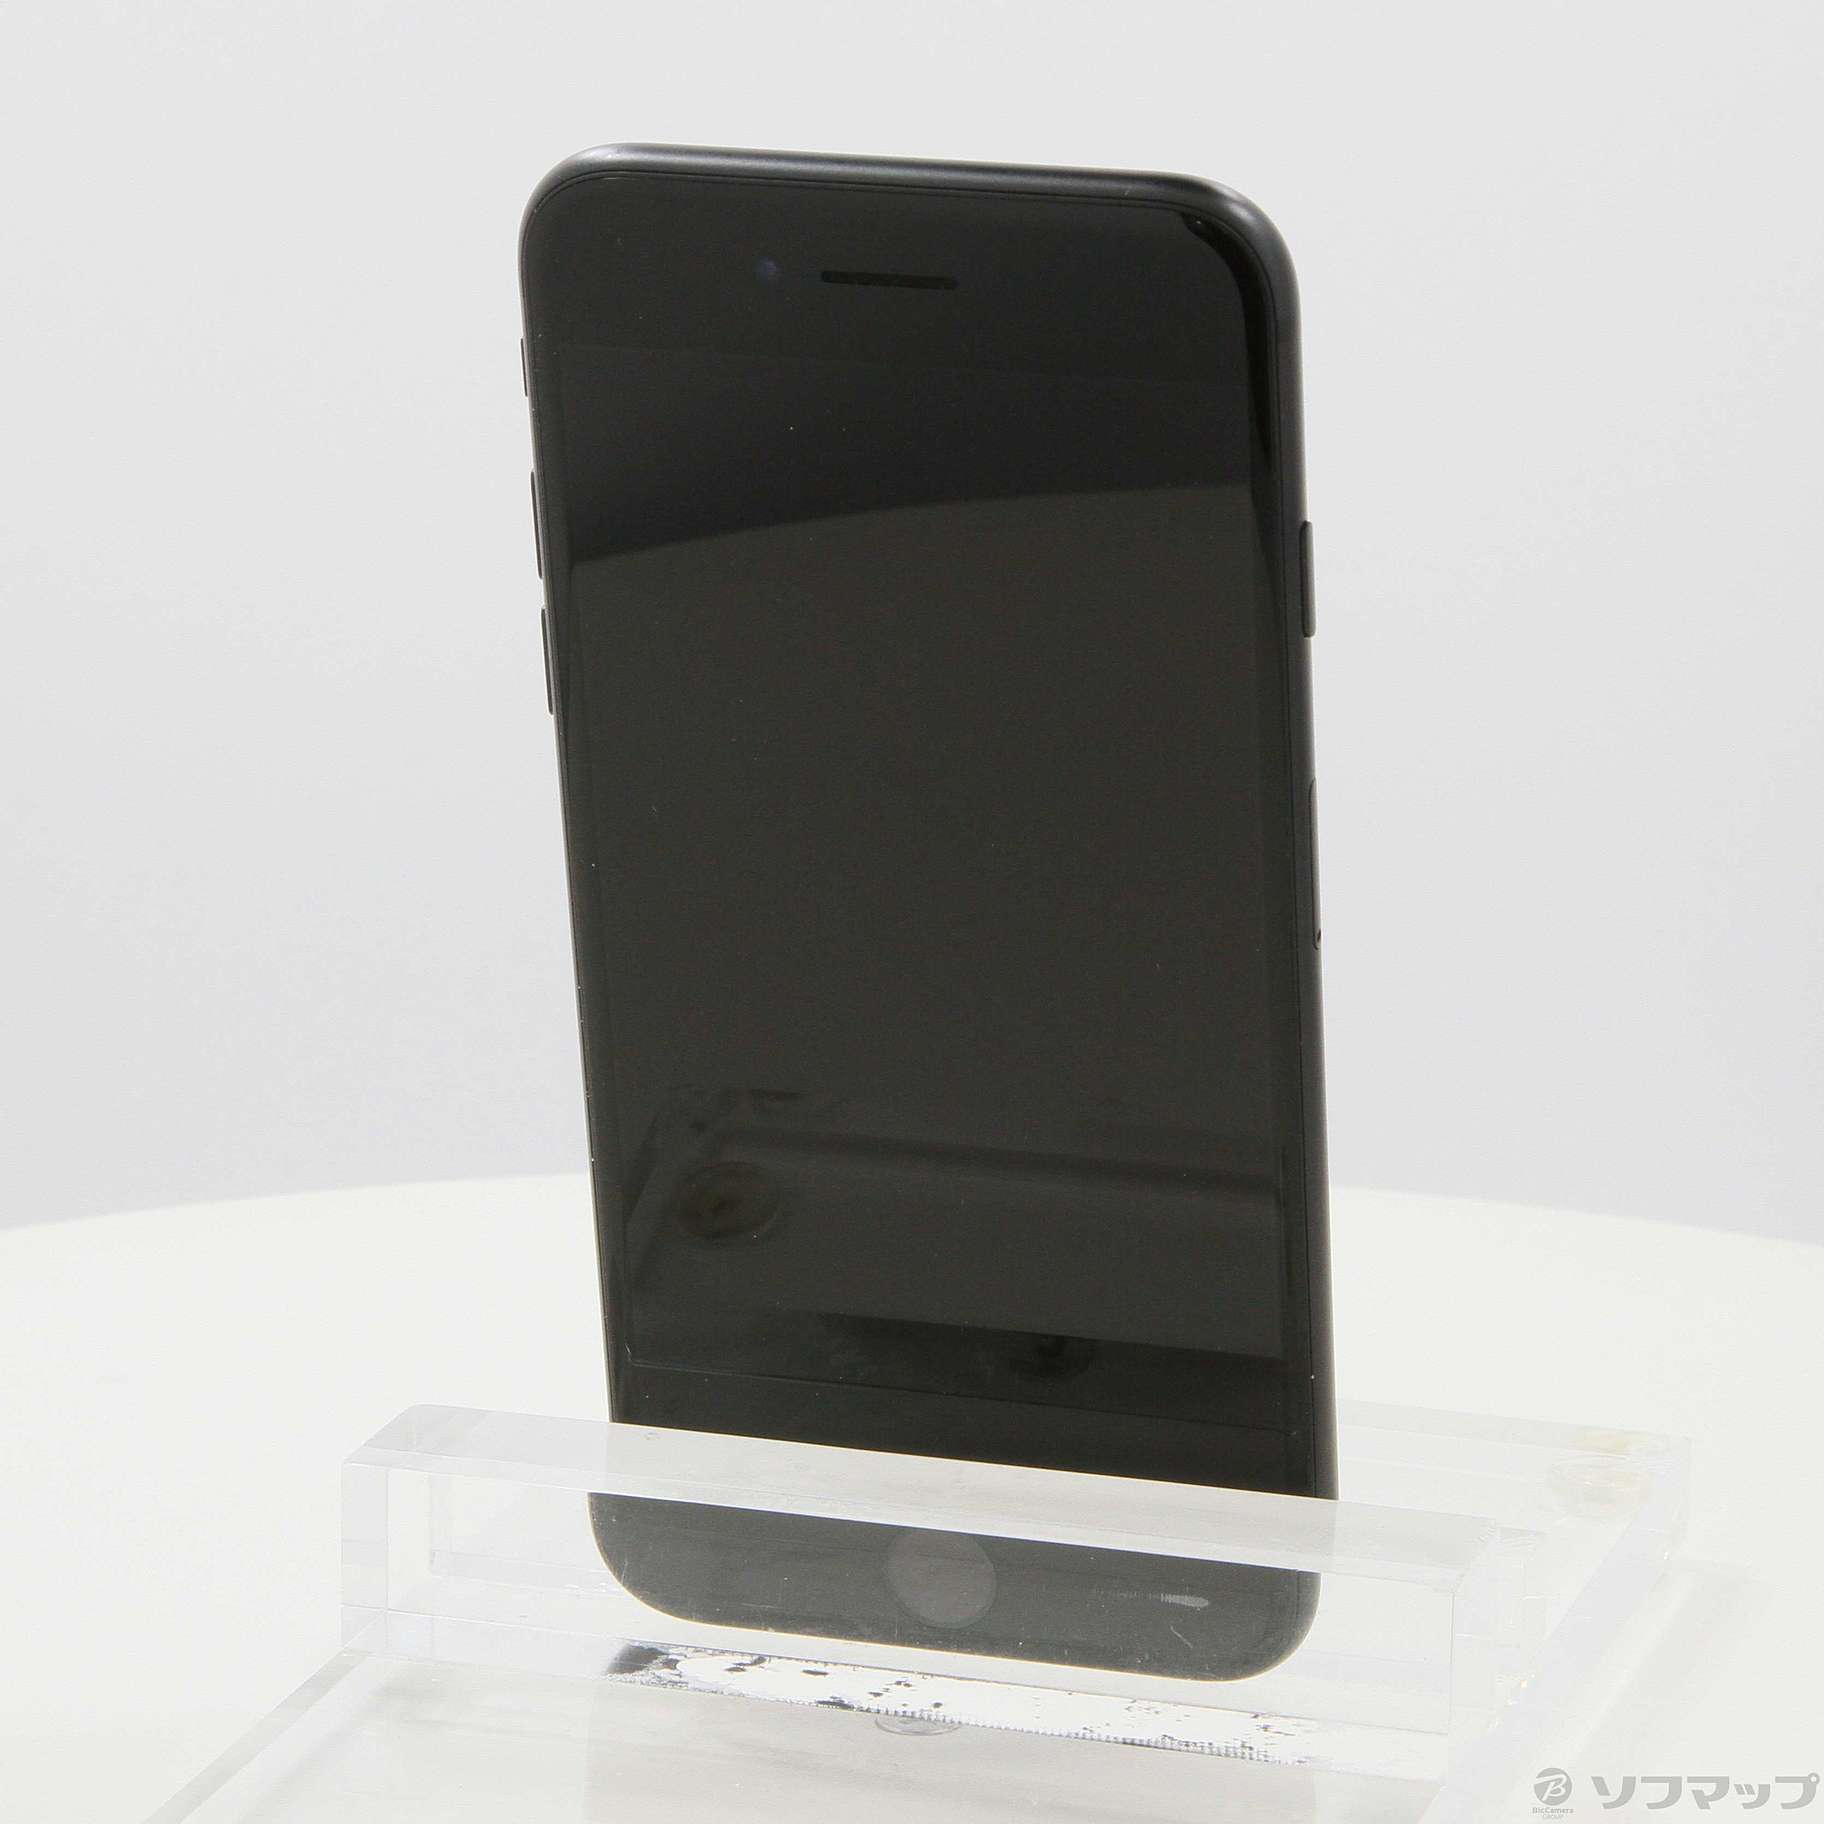 iPhone 7 Jet Black 32 GB Softbank - スマートフォン本体